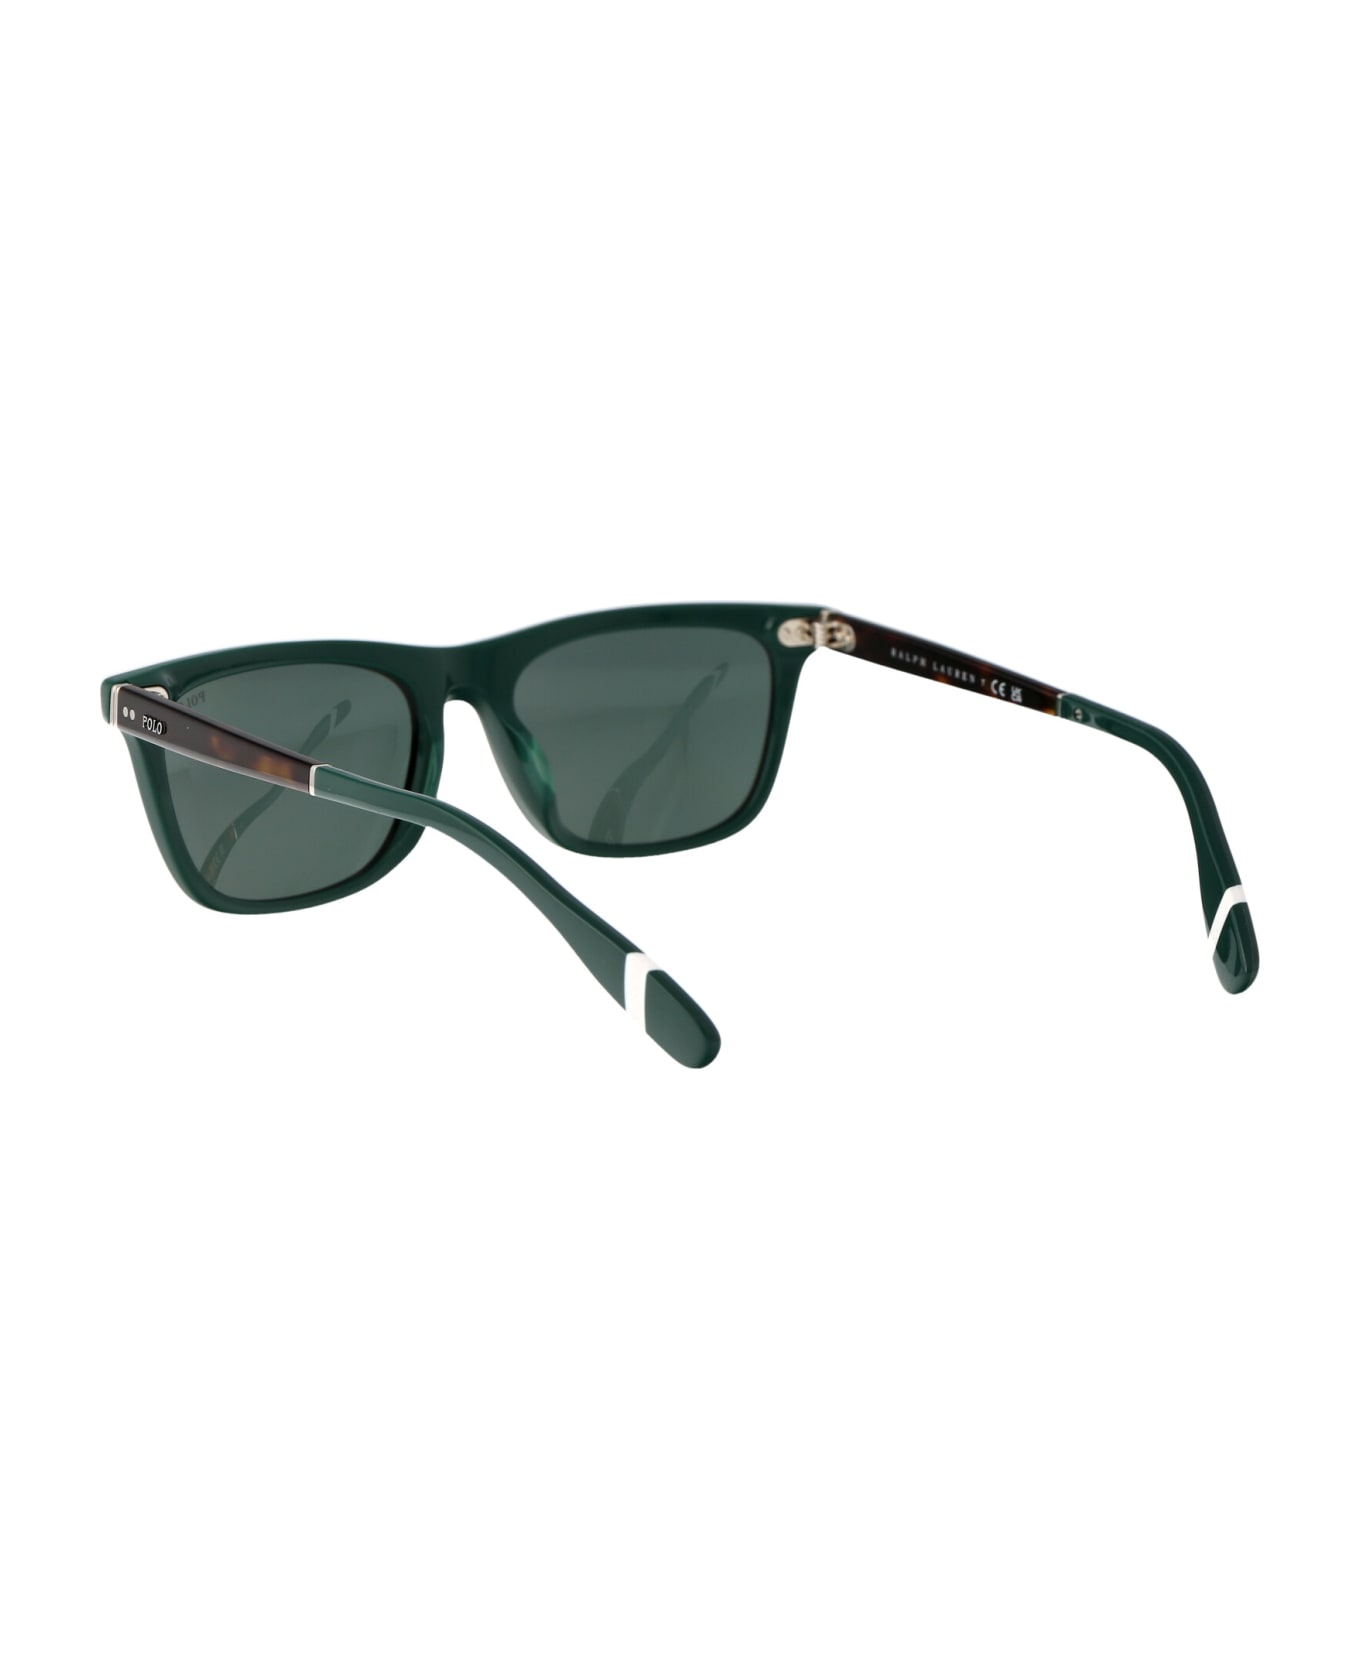 Polo Ralph Lauren 0ph4205u Sunglasses - 614171 Shiny Green サングラス